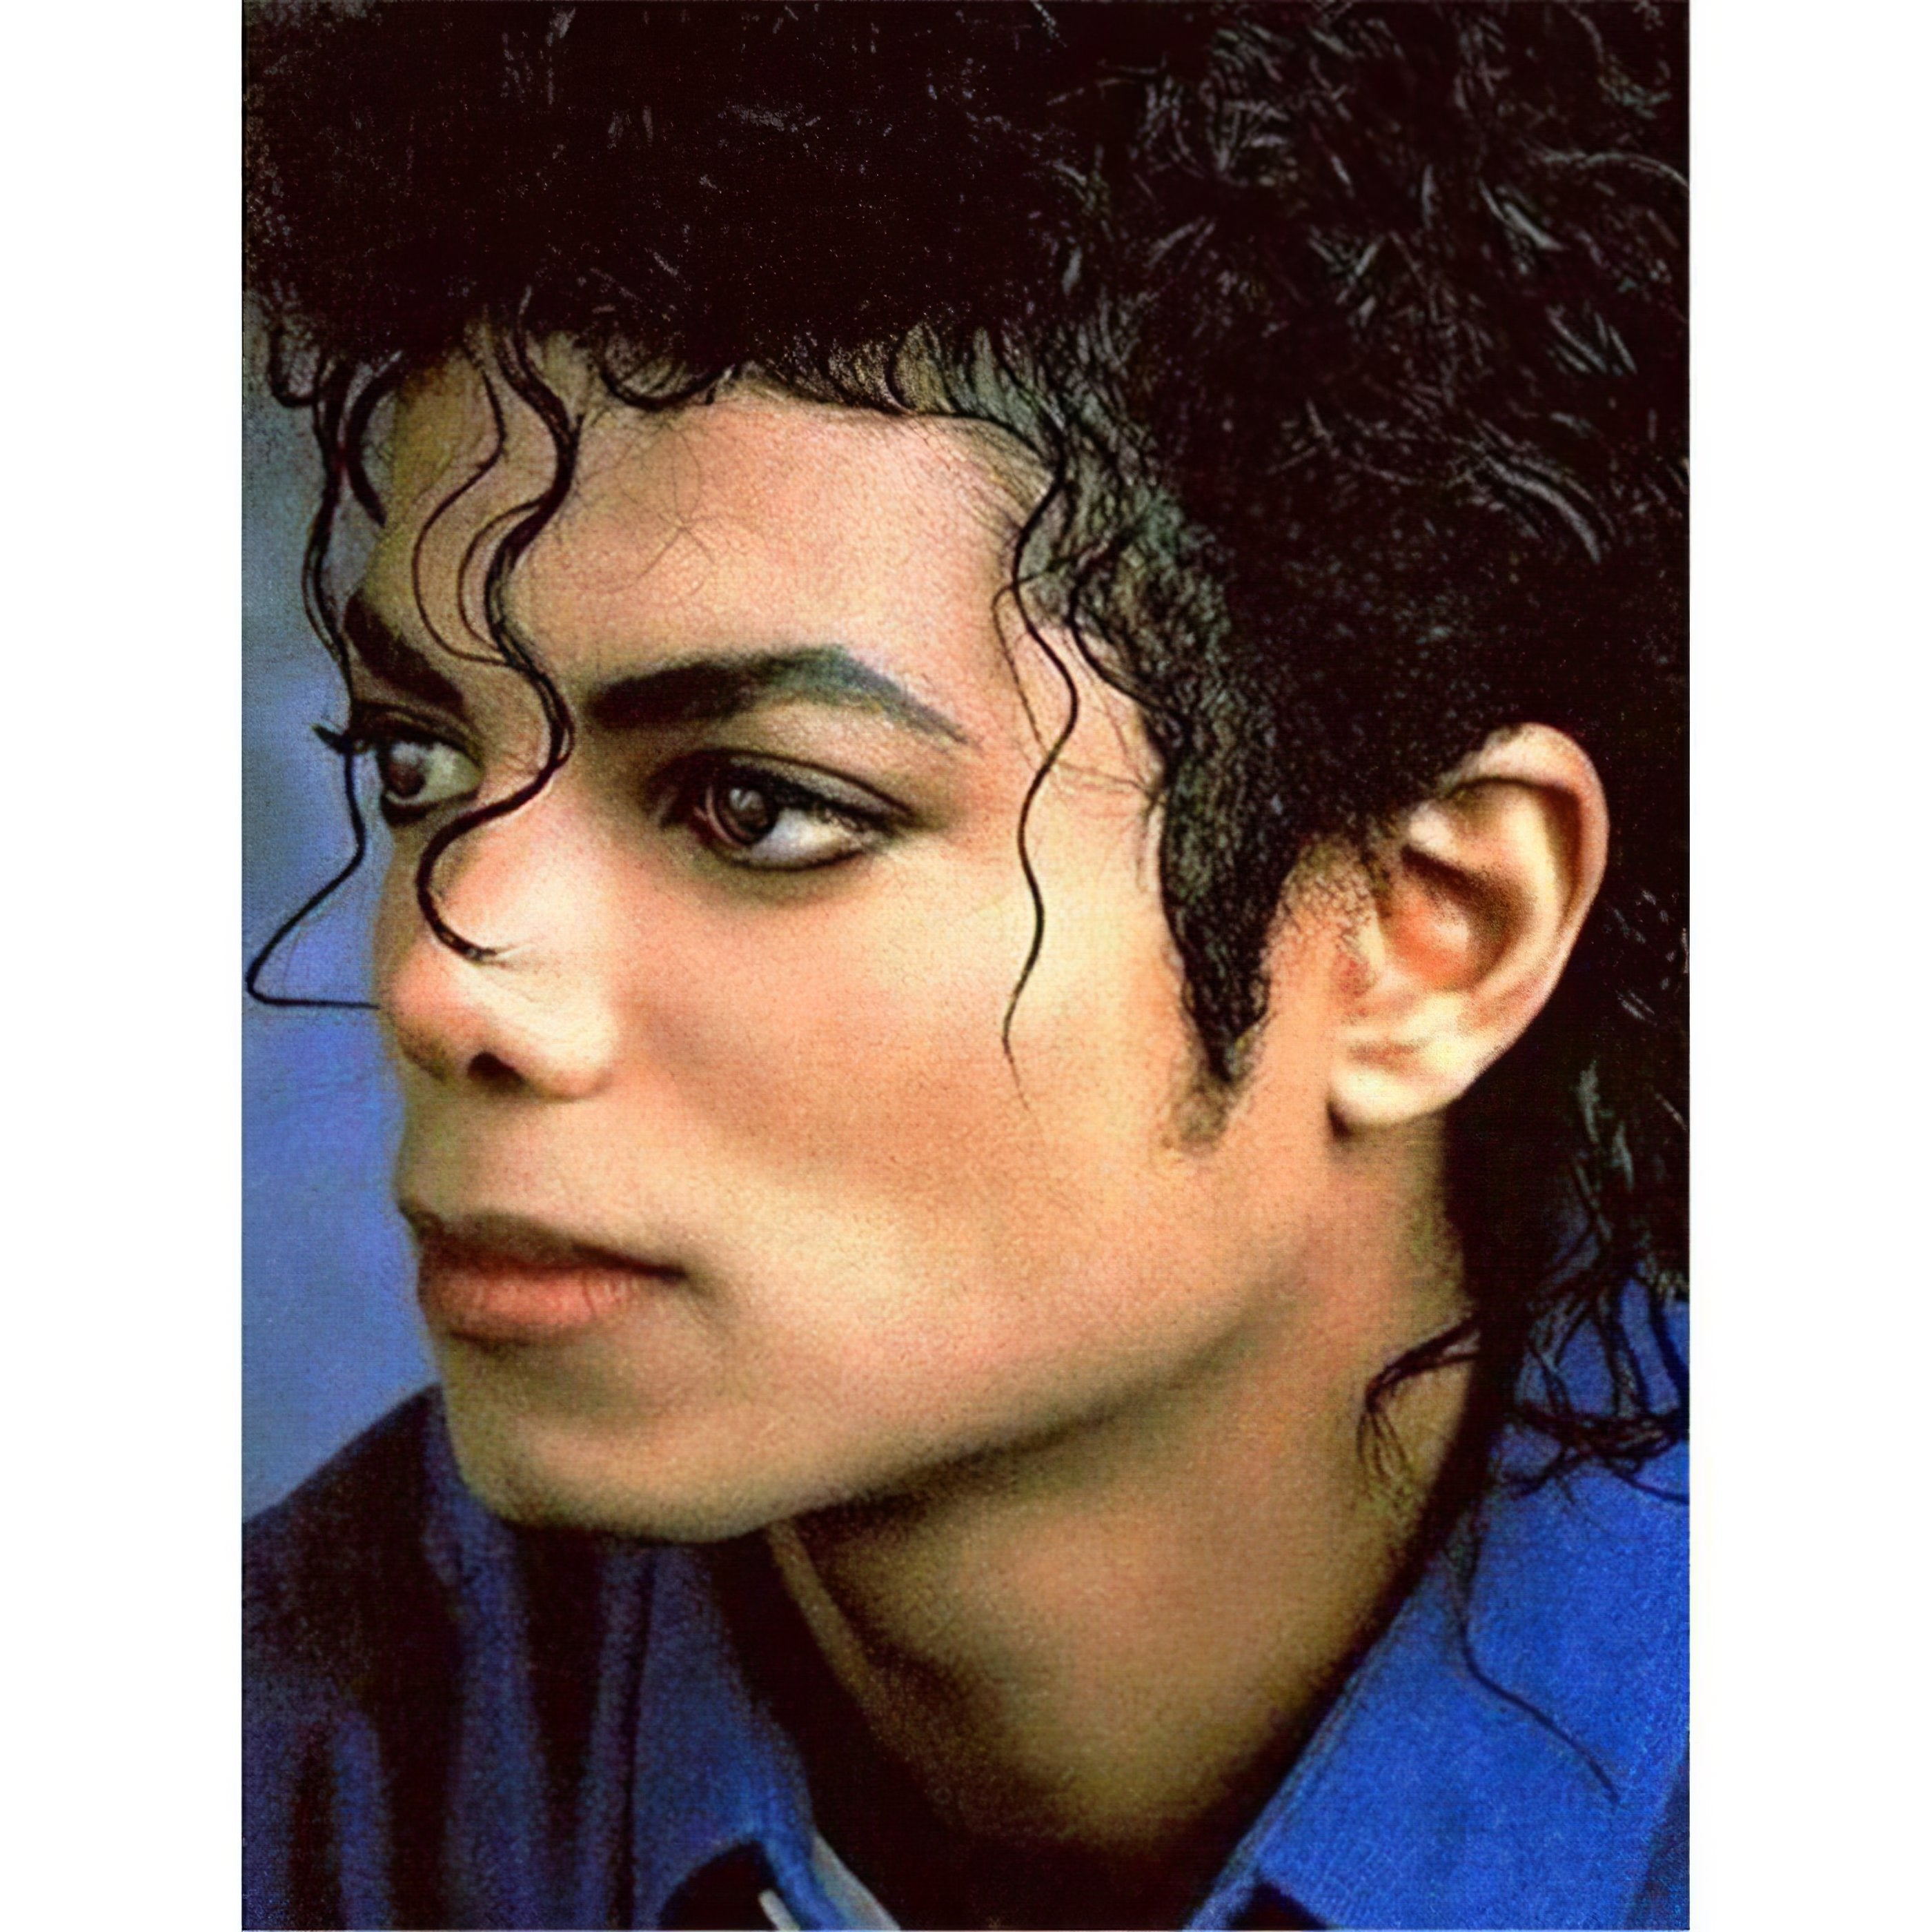 Capture the essence of Michael's influence in music and fashion.Michael Jackson - Diamondartlove